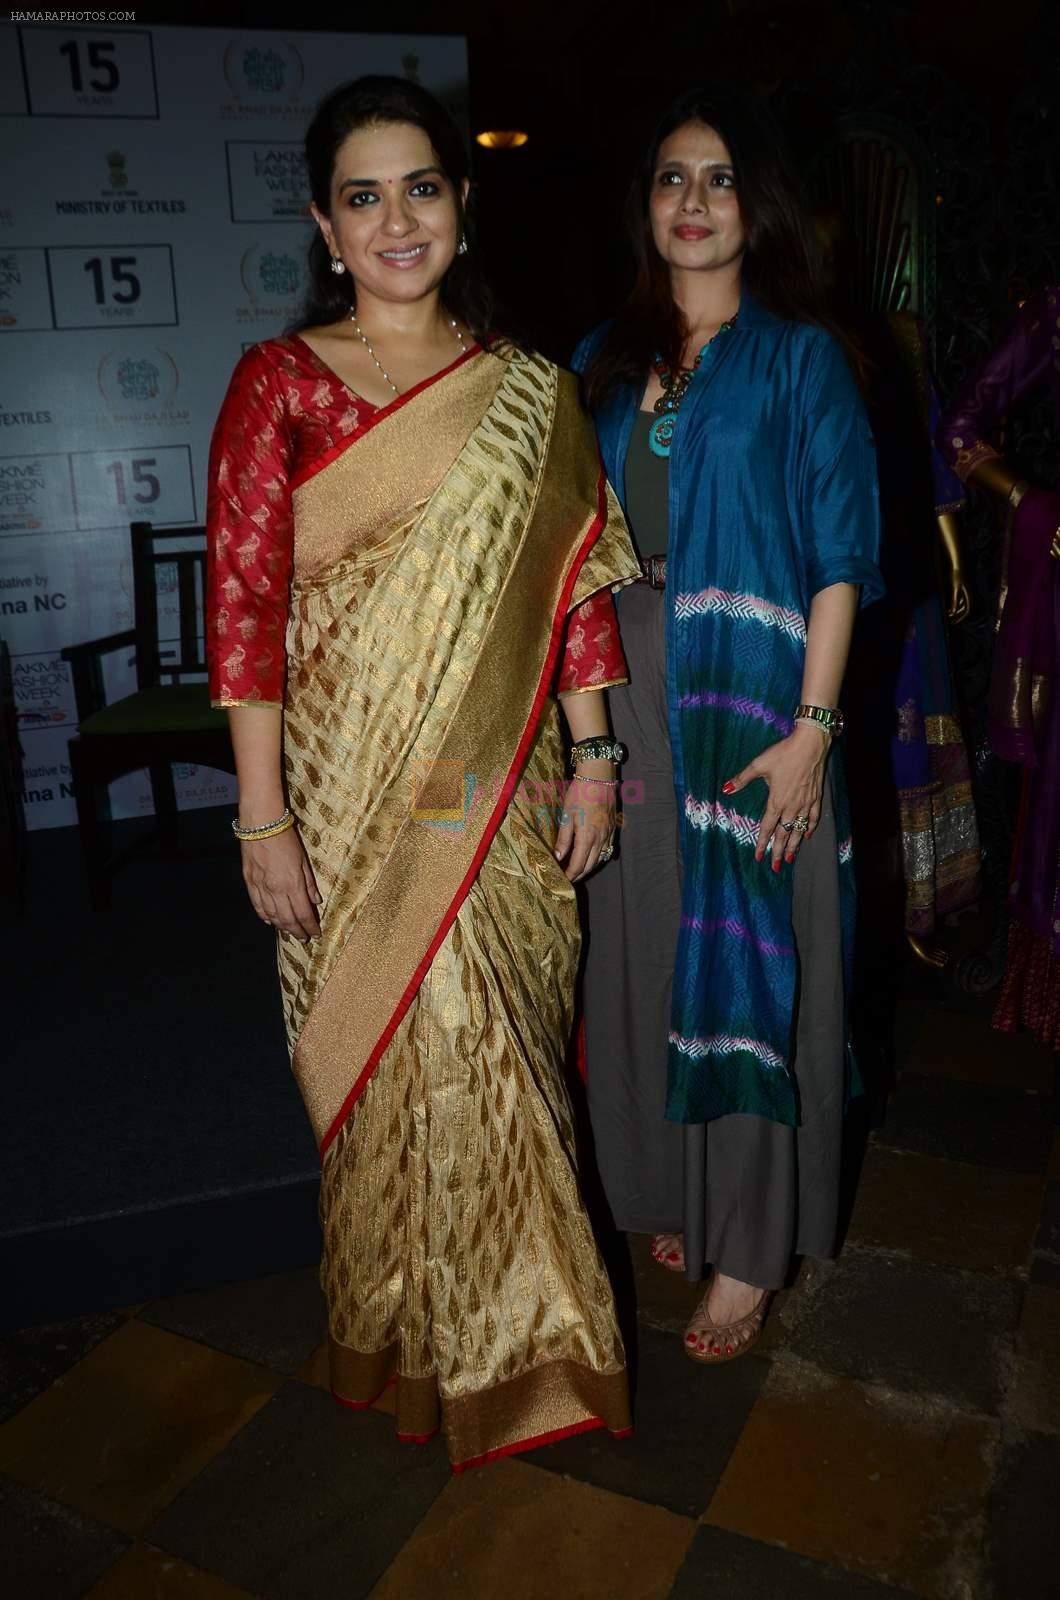 Shaina NC at LFW Winter Festive 2015 presnts Re-invent Banaras